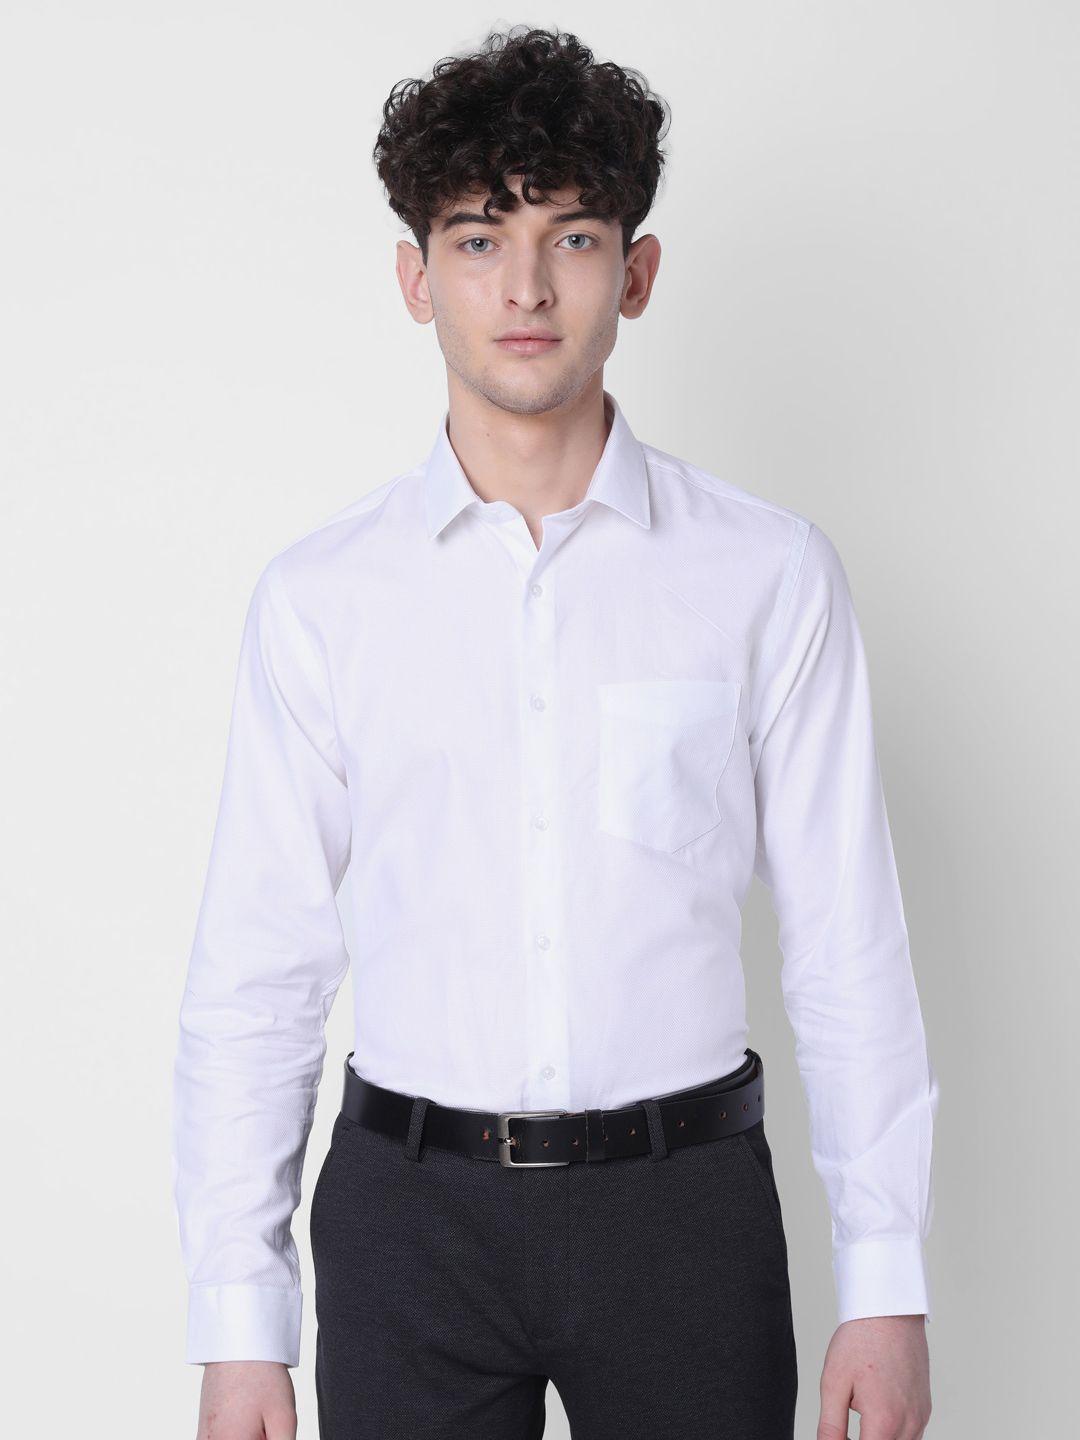 j hampstead classic opaque cotton formal shirt